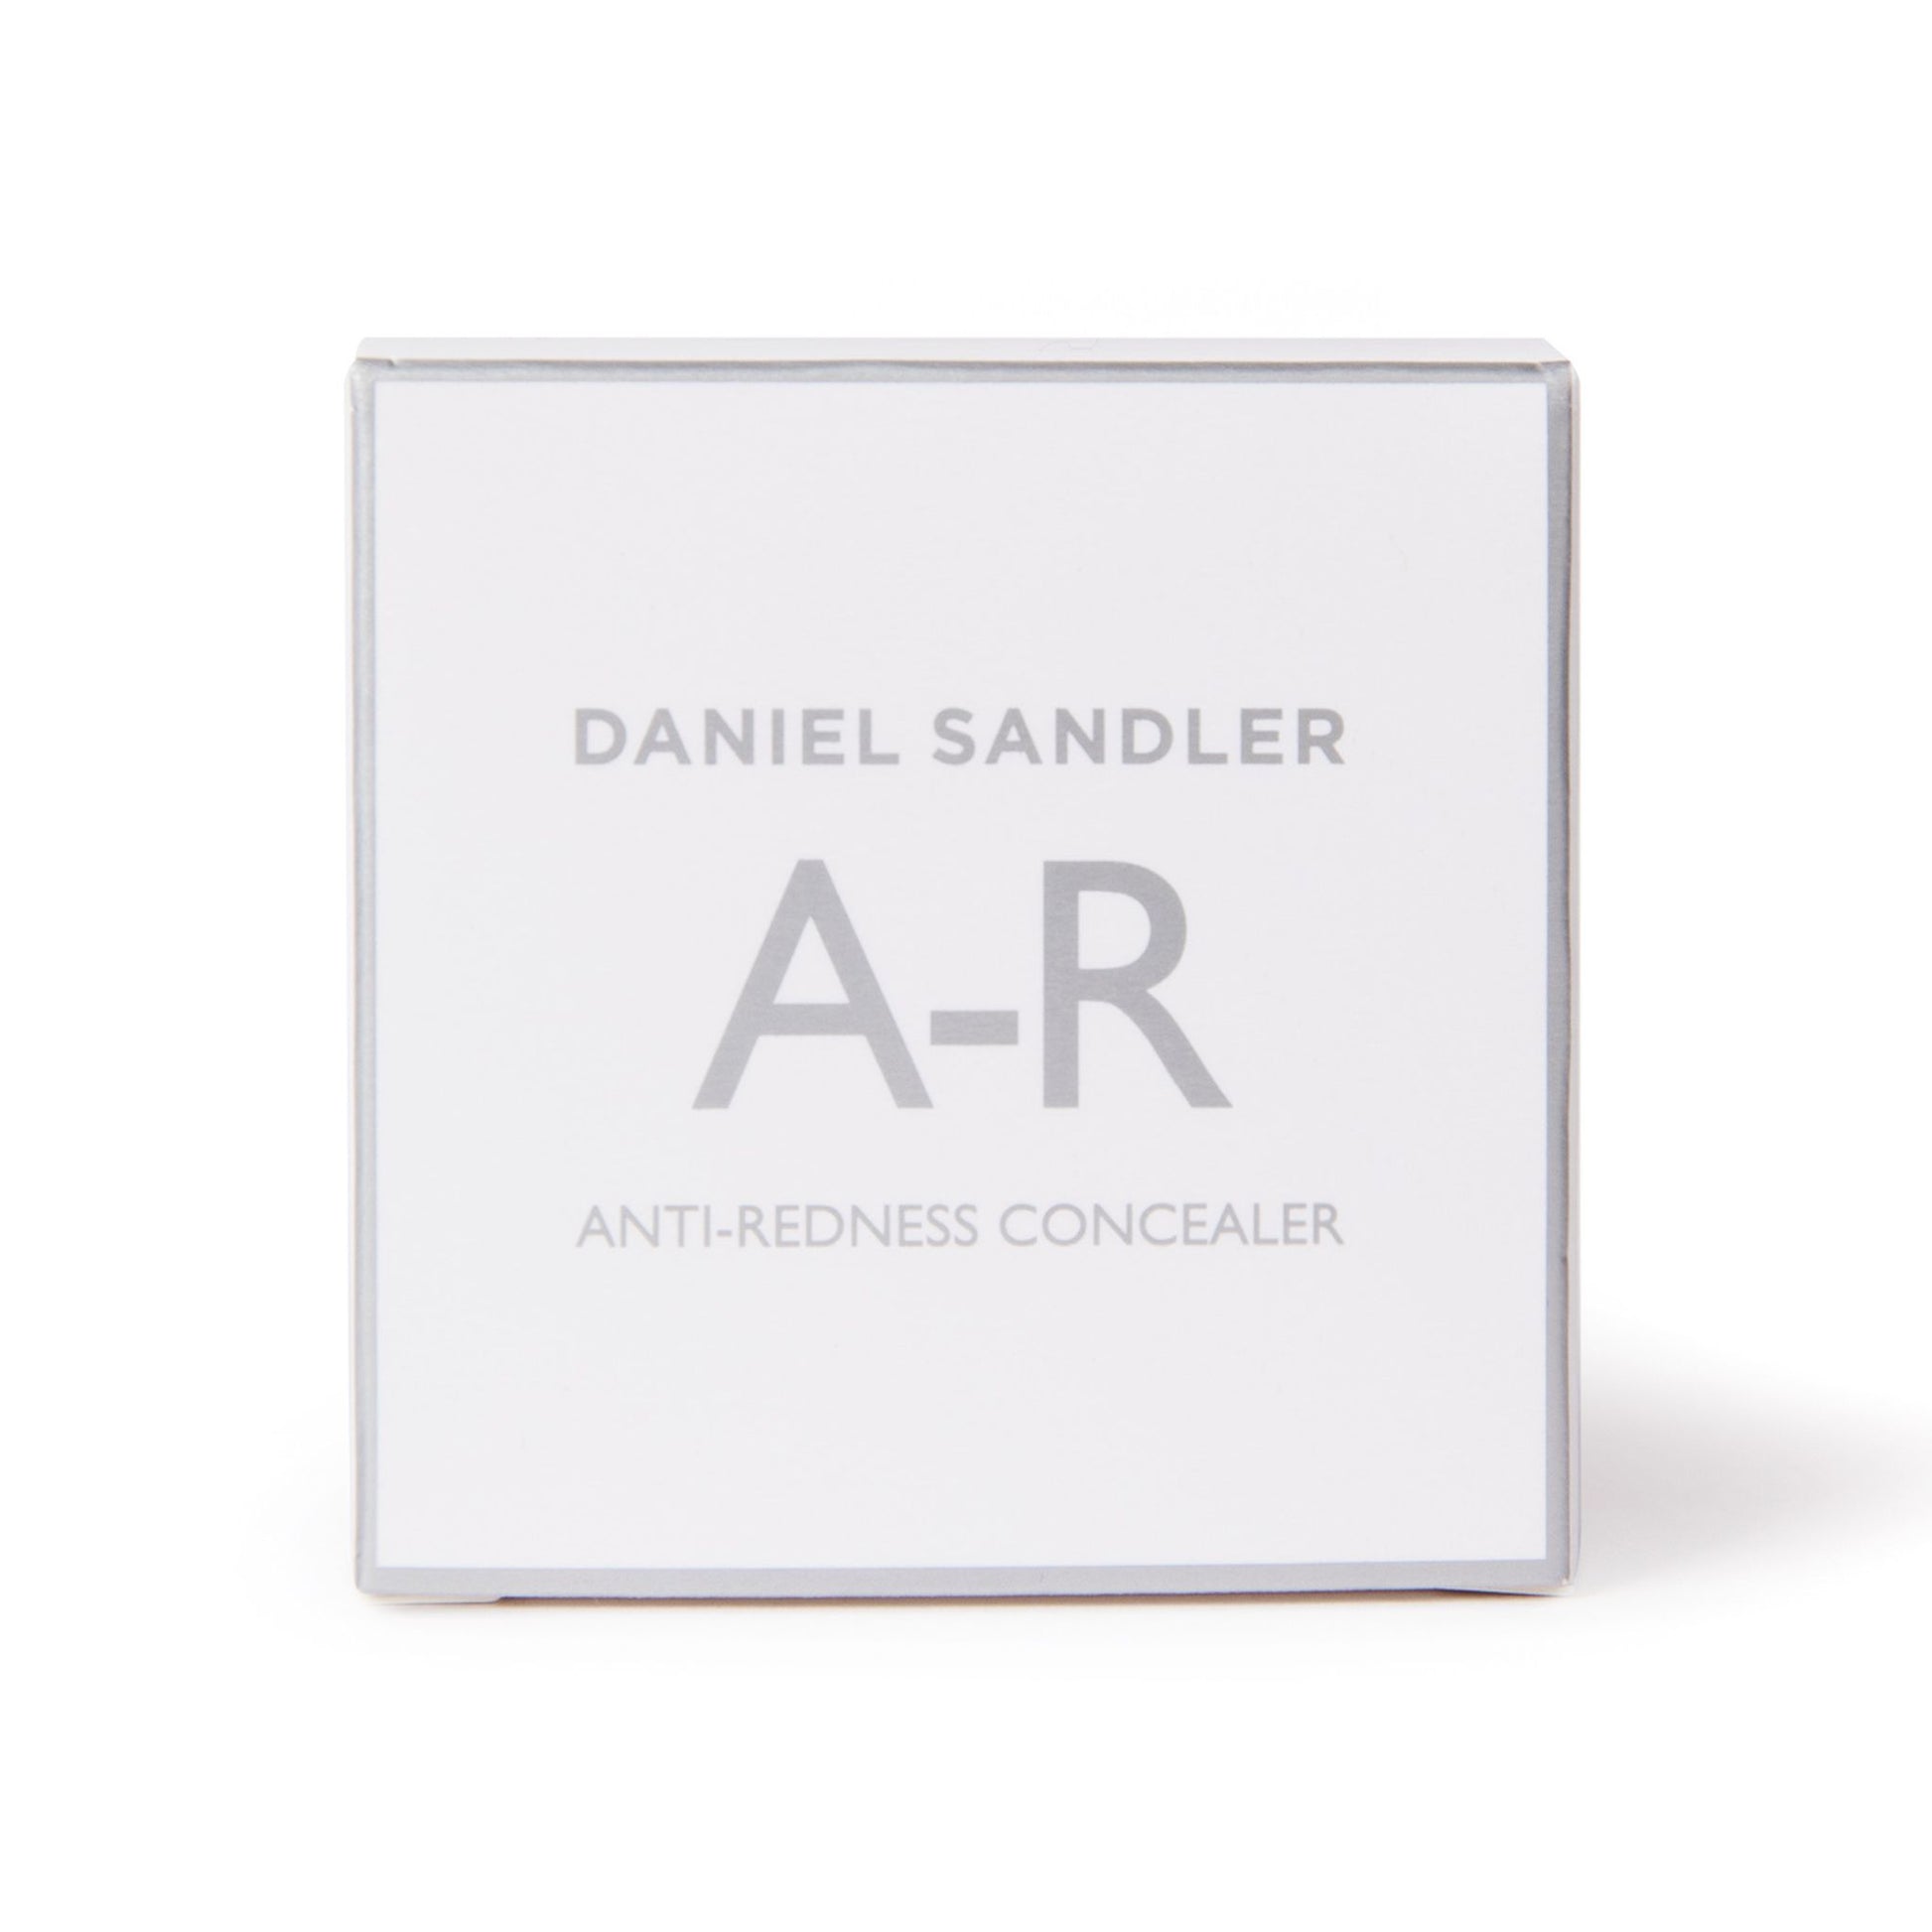 Daniel Sandler Anti-Redness Concealer Product Box